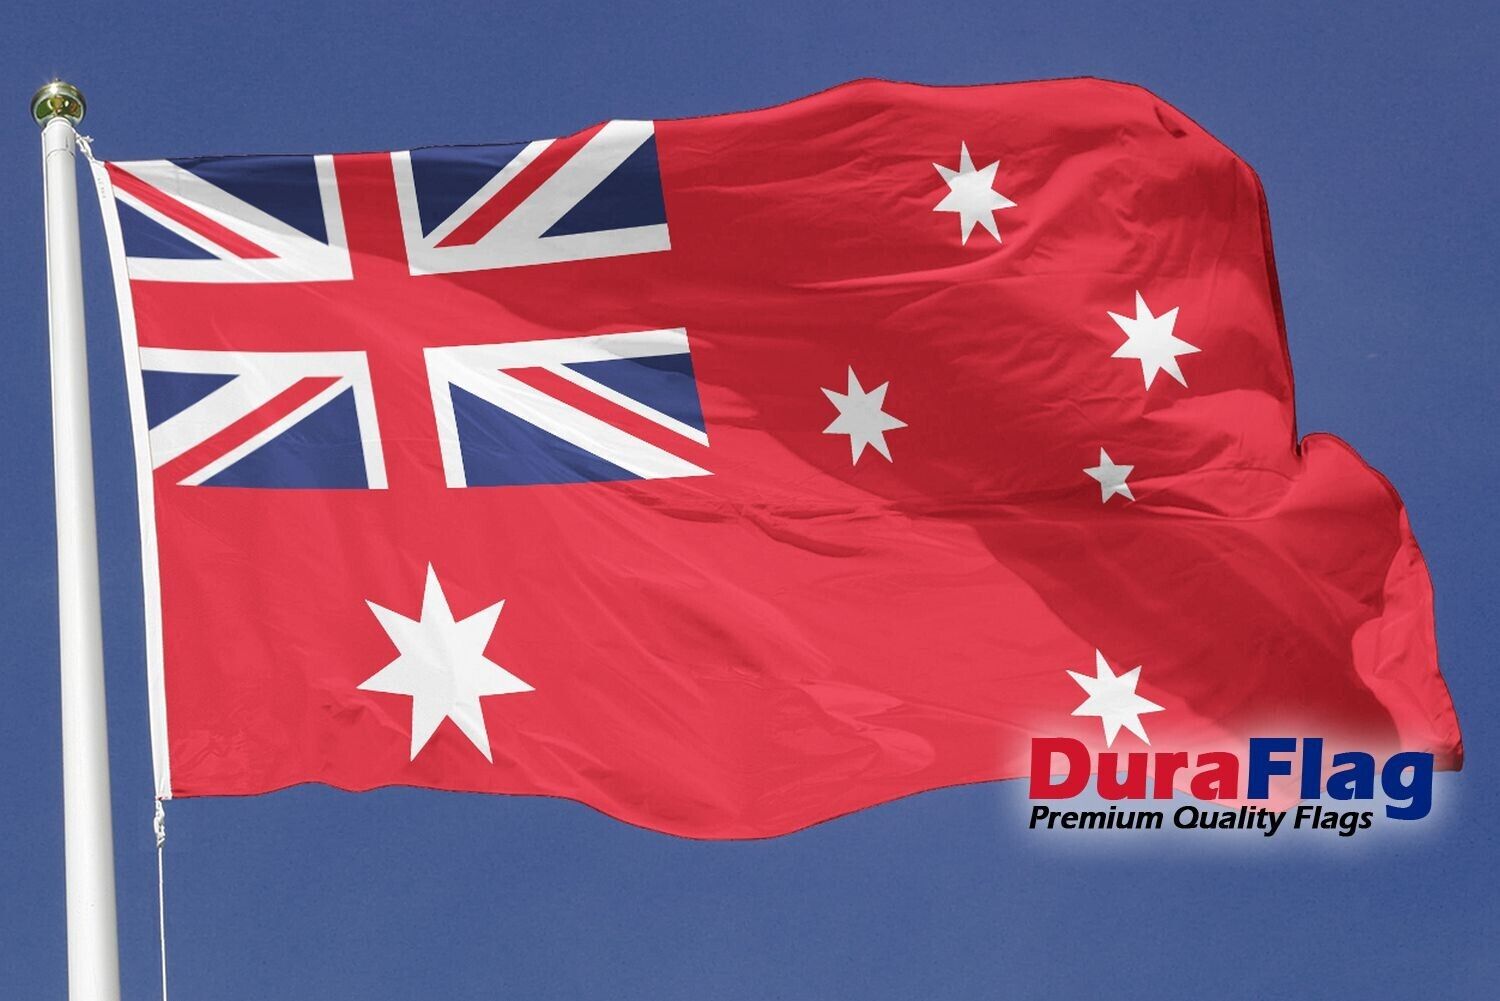 Australia Red Ensign Duraflag Premium Quality (20x12inch) Flag